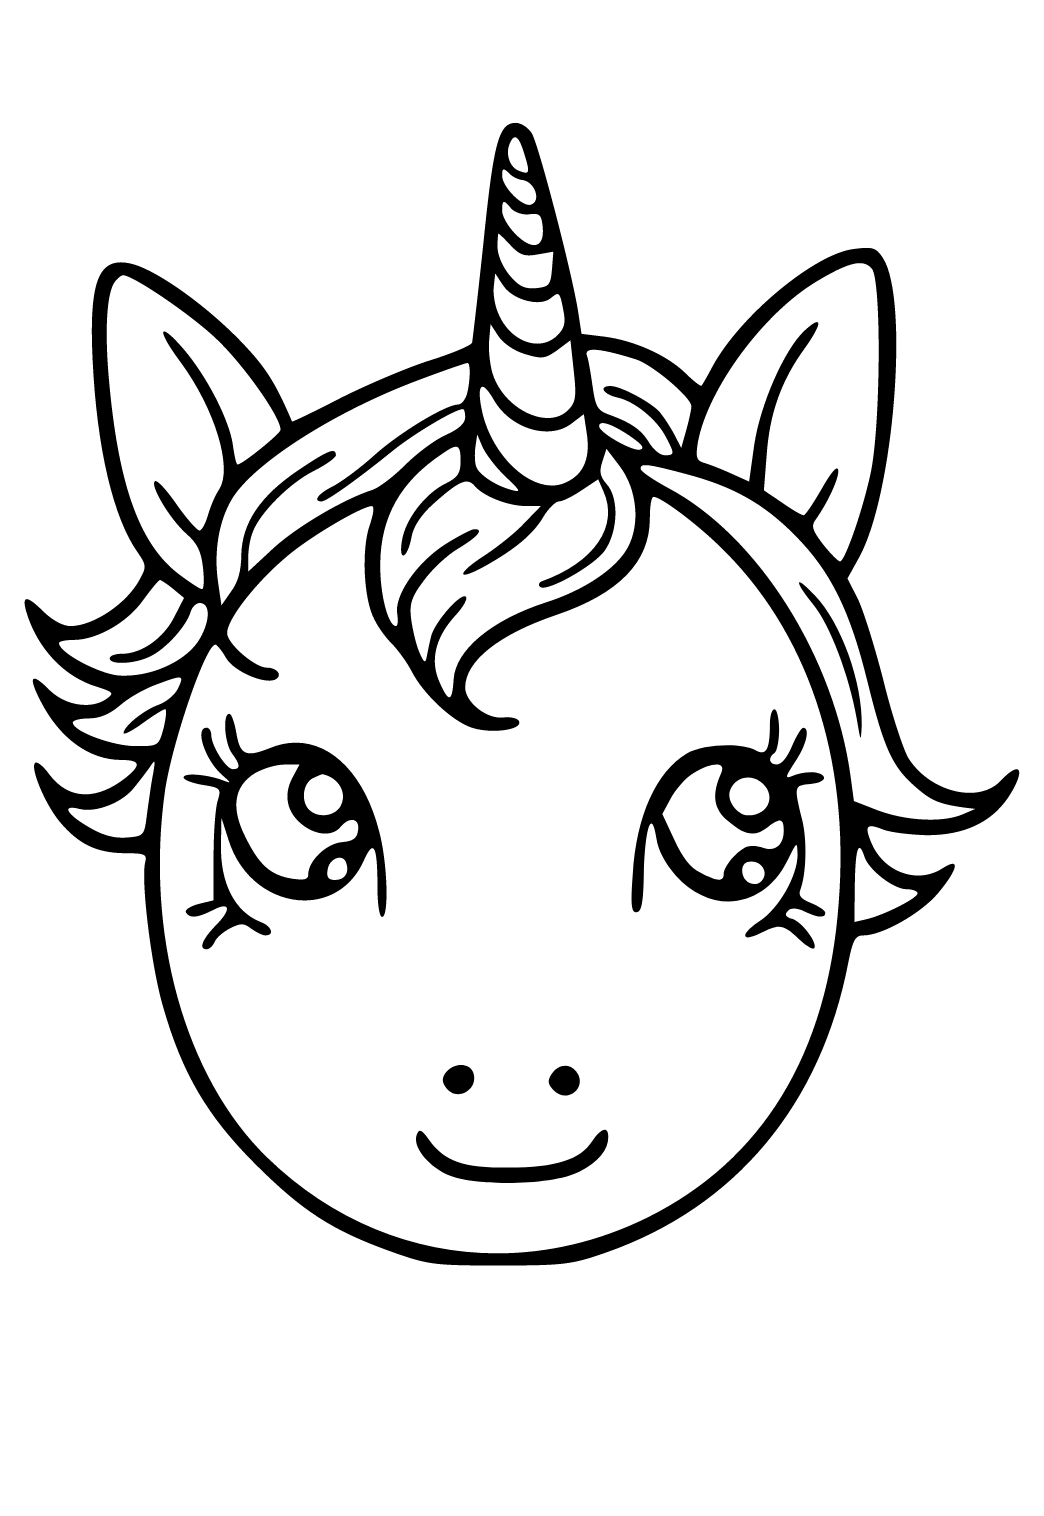 Cute Magical Unicorn. Tattoo Design Stock Illustration - Illustration of  magic, fantasy: 97239414